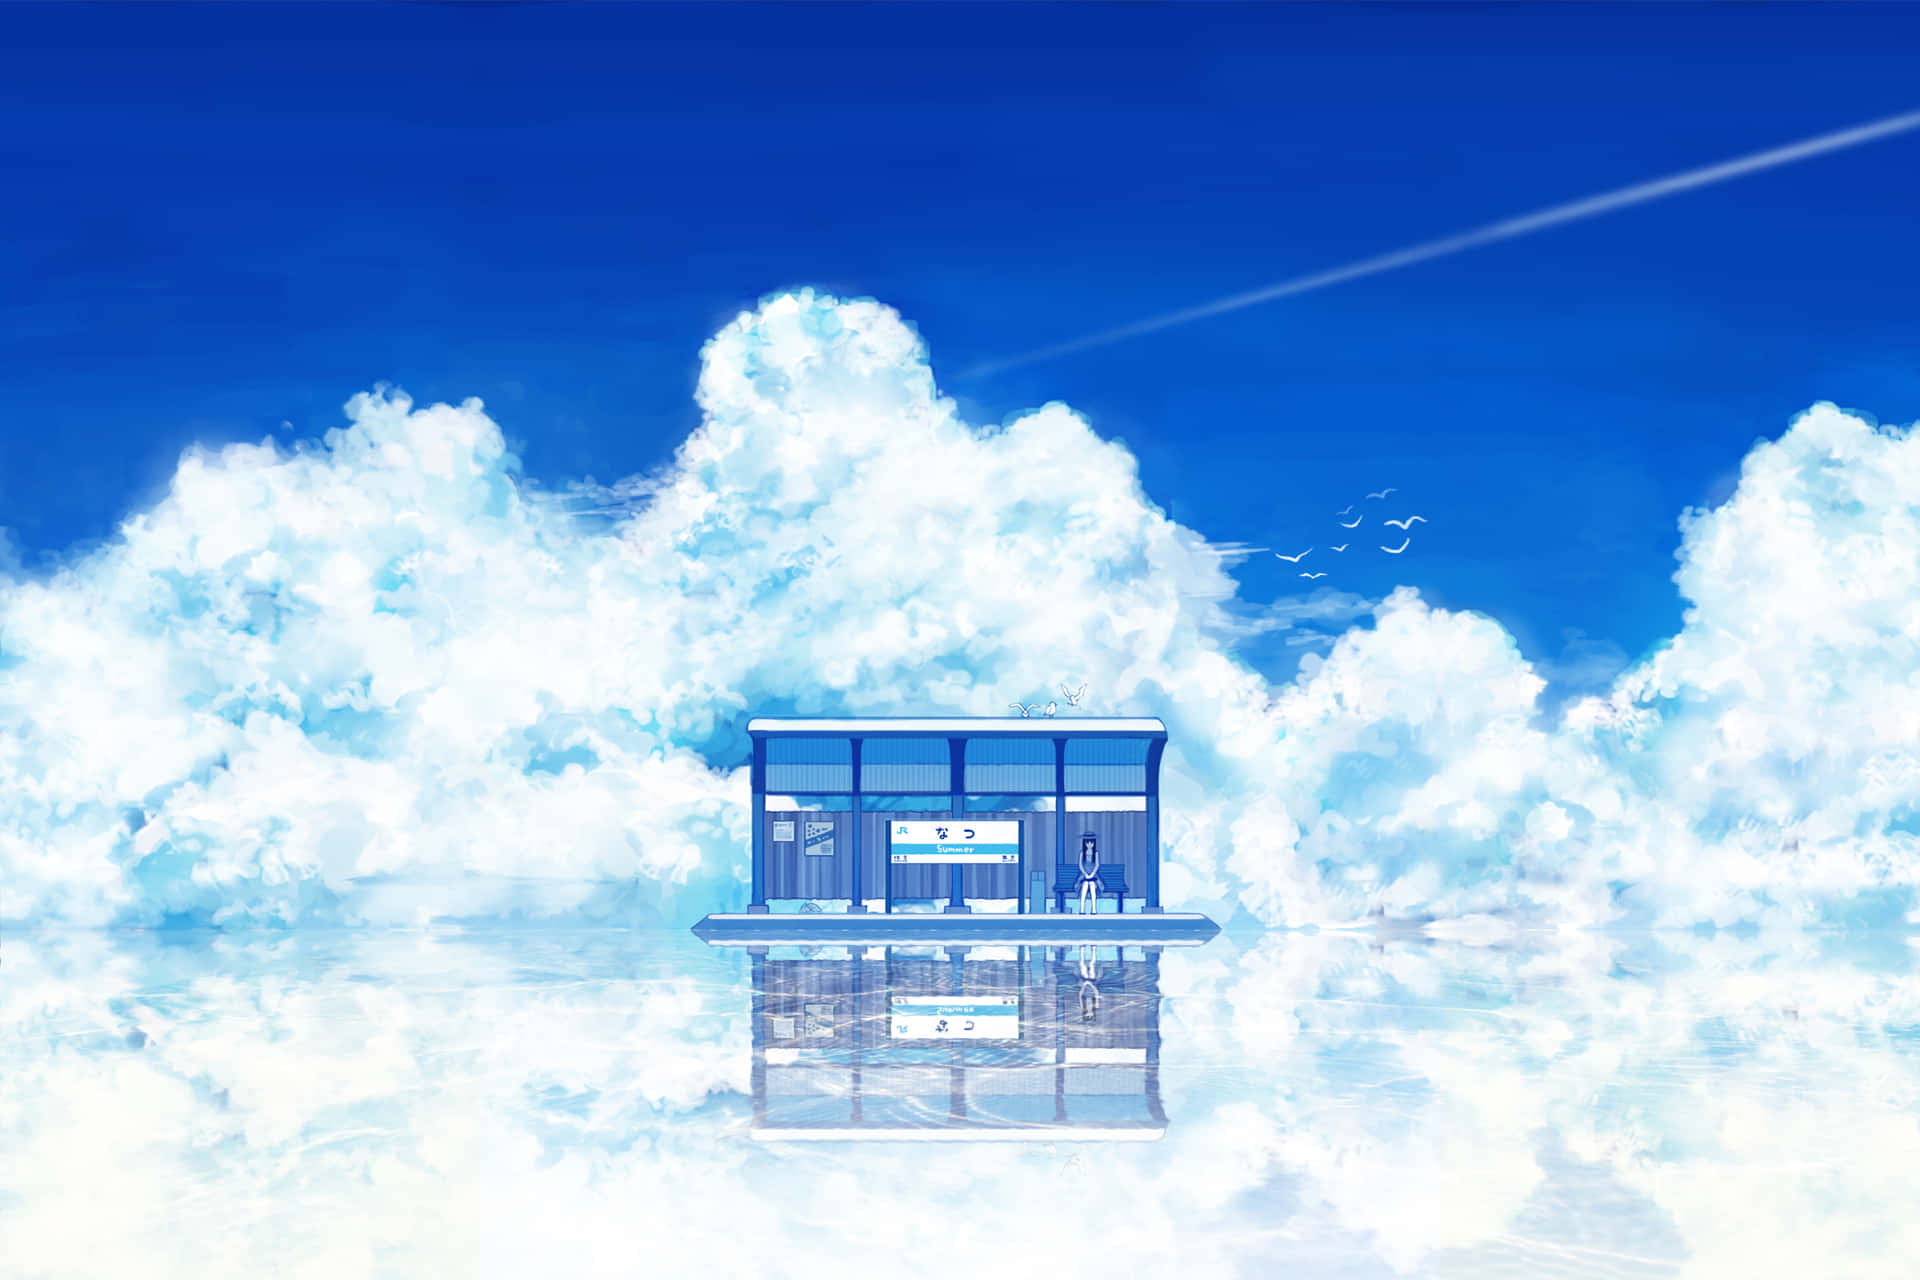 Sky Bus Stop Beautiful Anime Scenery Wallpaper